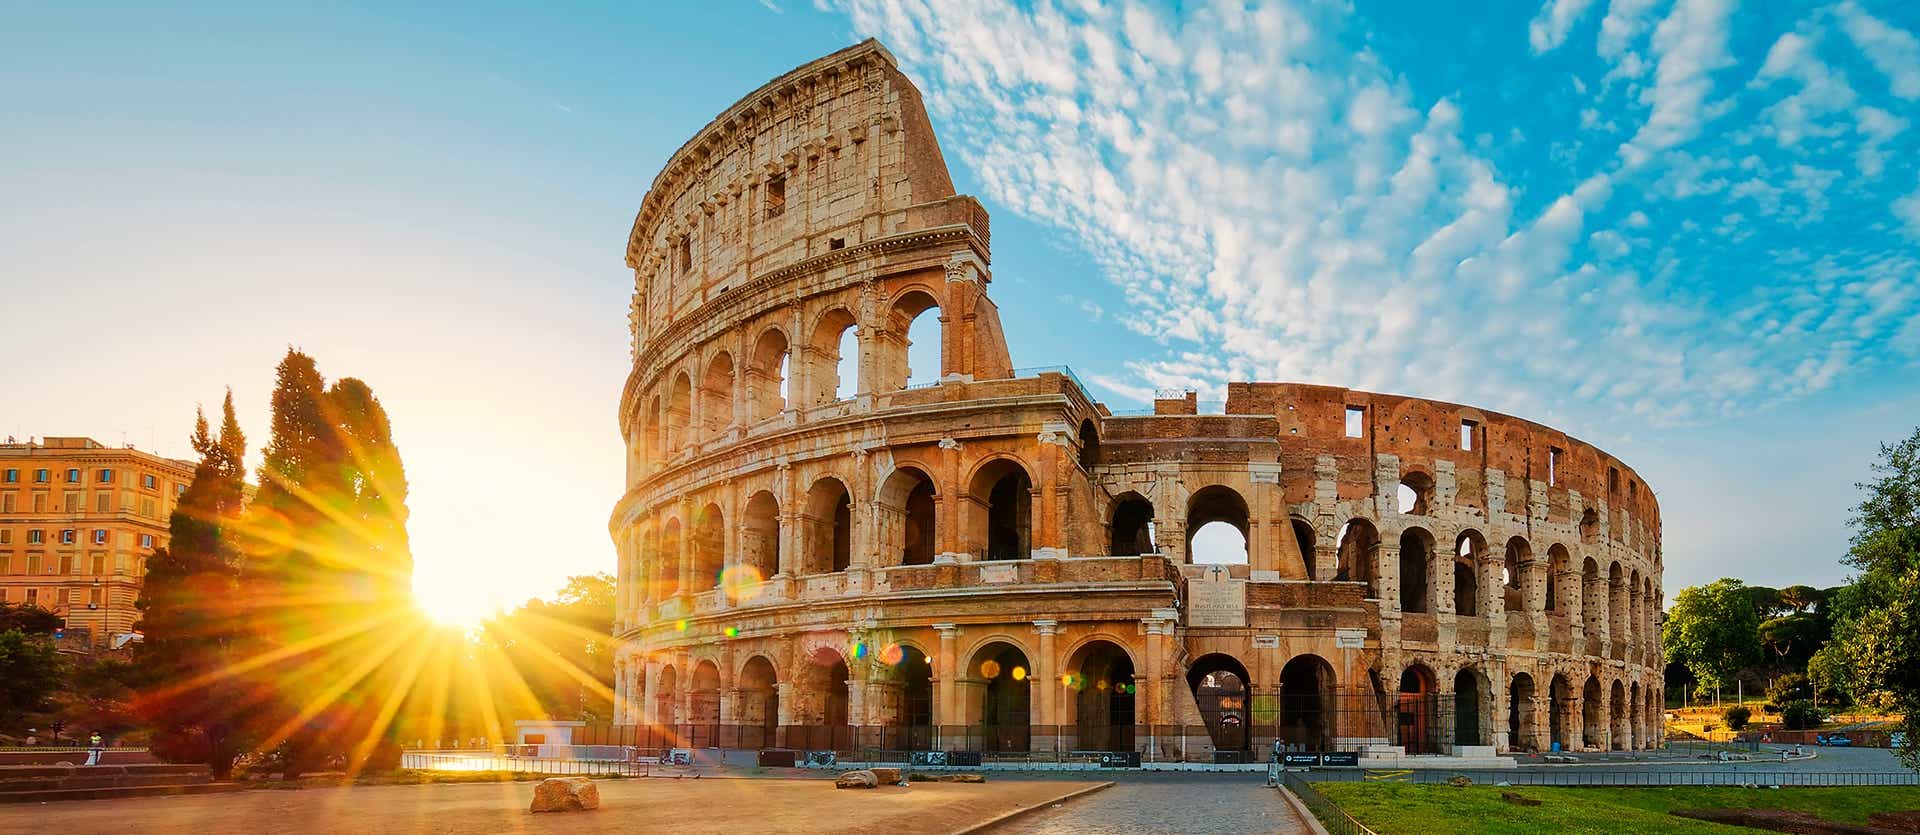 El Coliseo <span class="iconos separador"></span> Roma